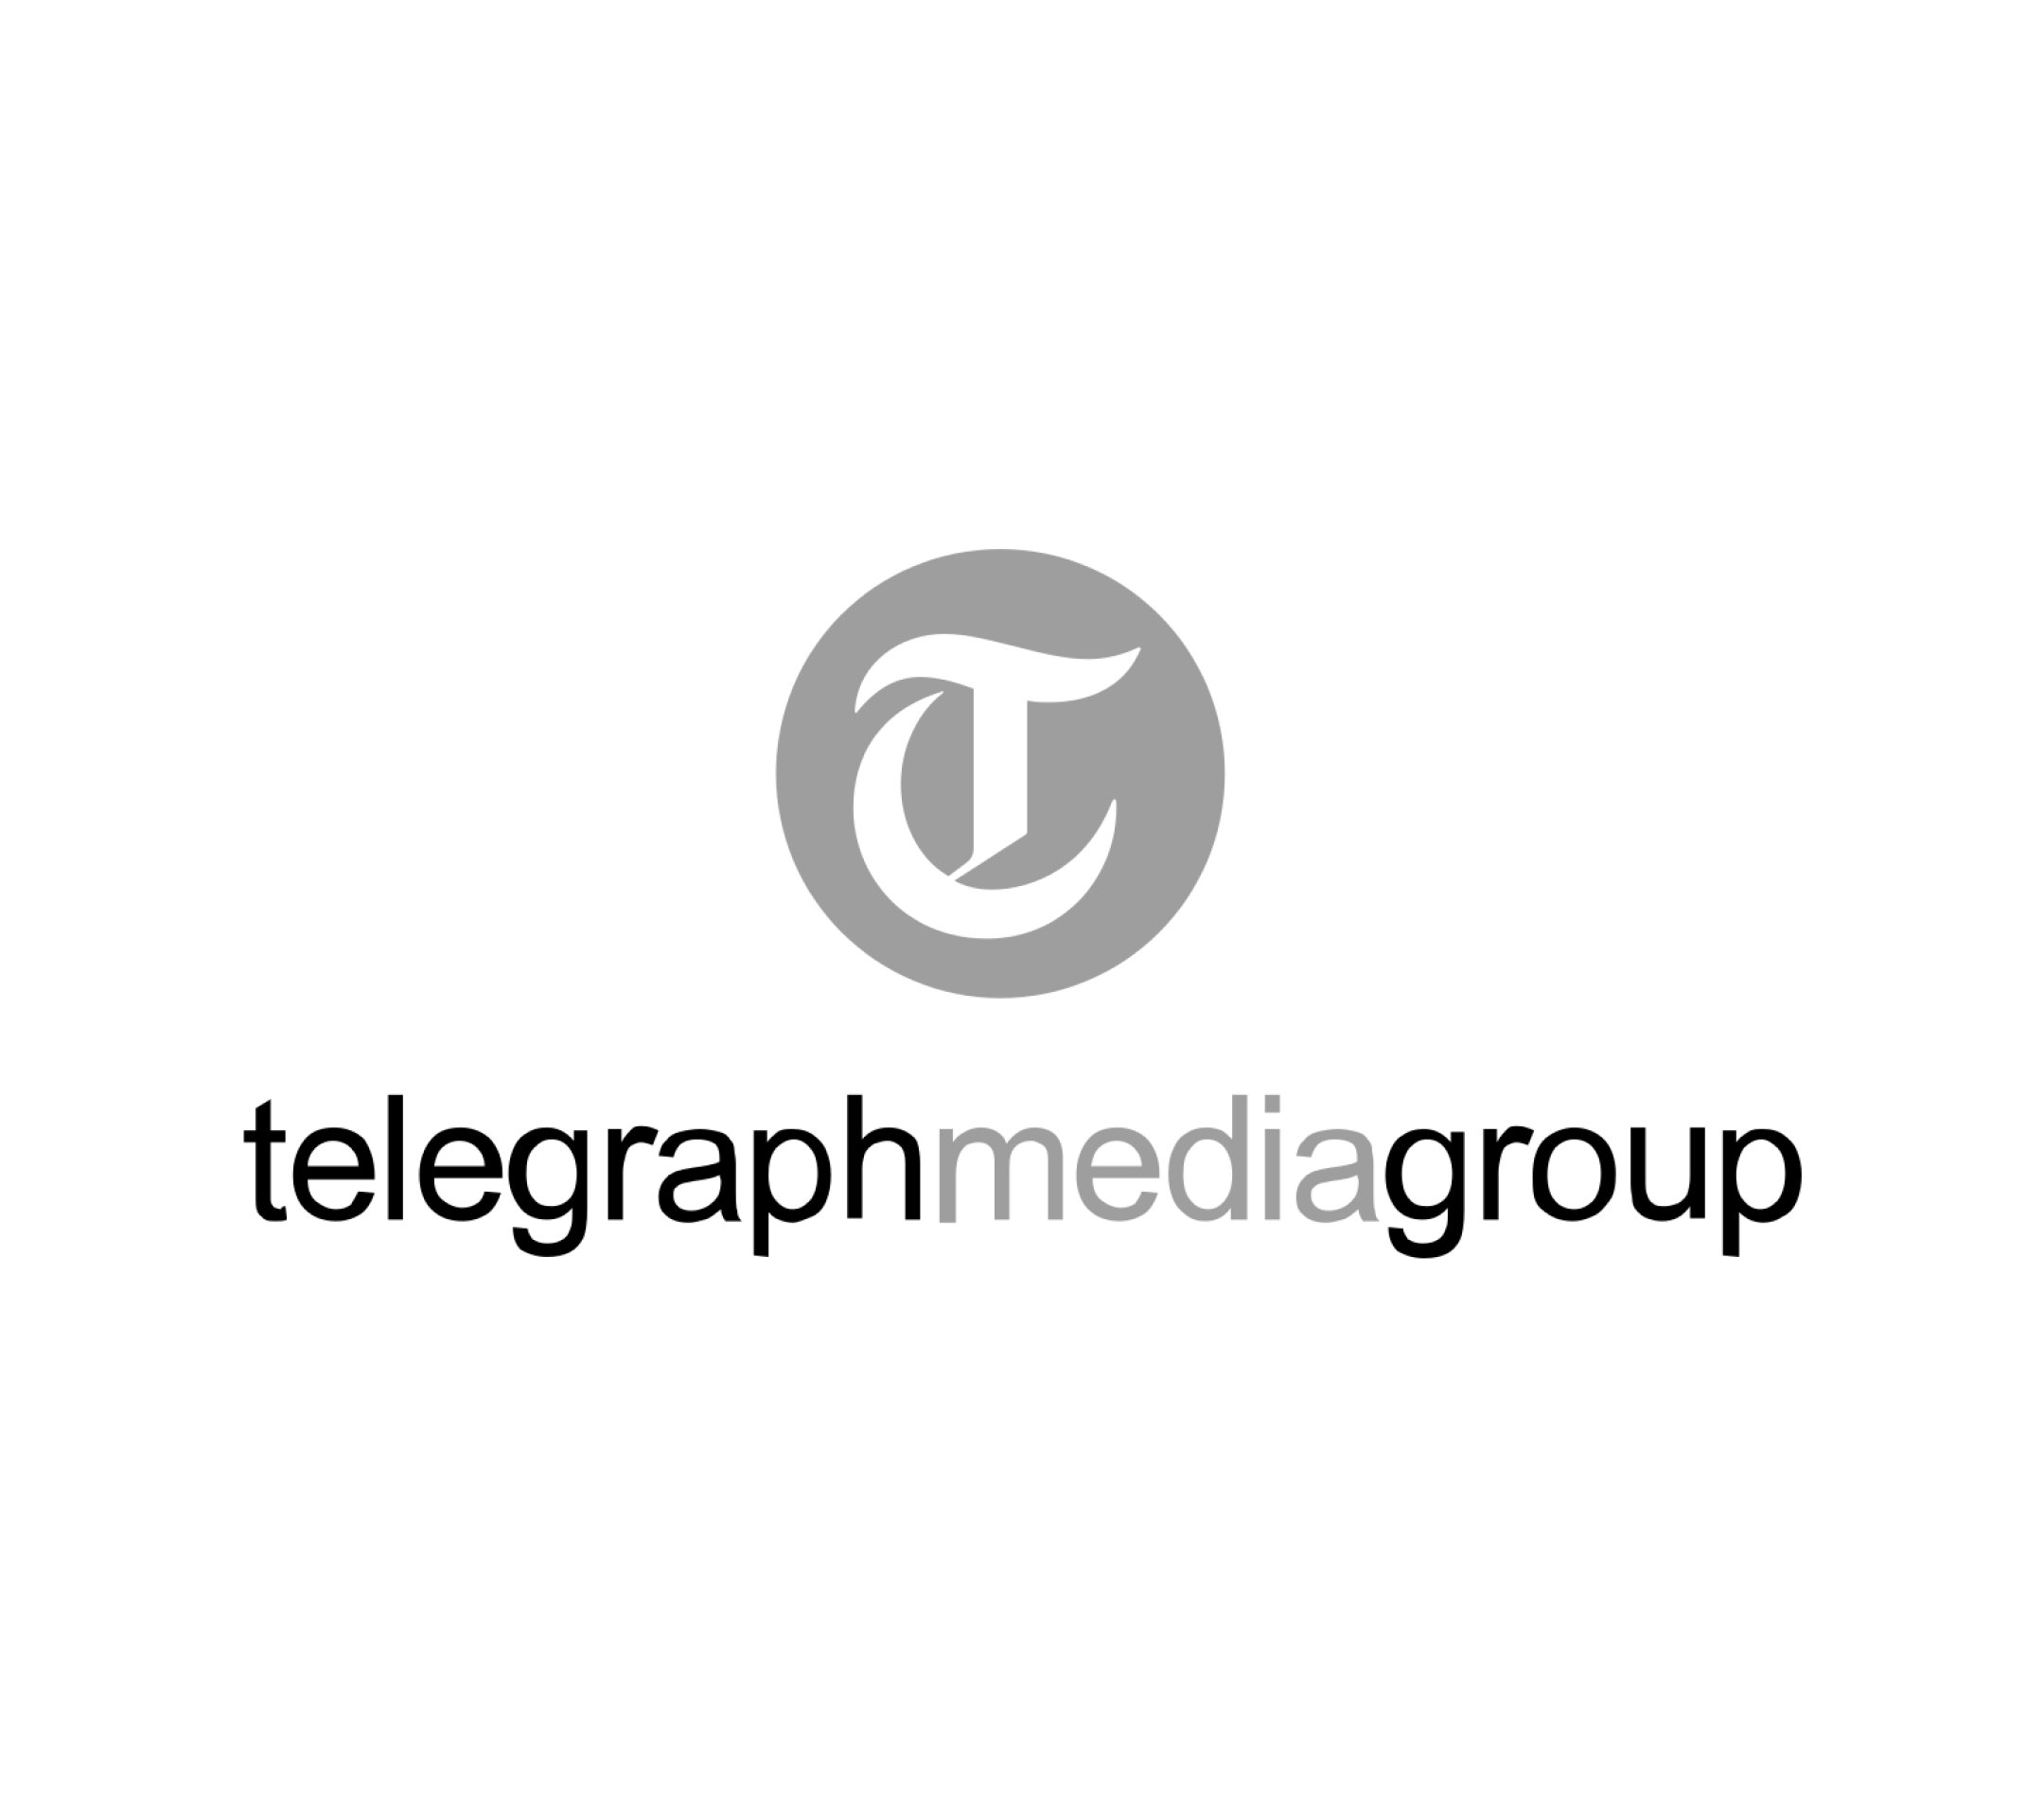 SPARK | Telegraph Media Group